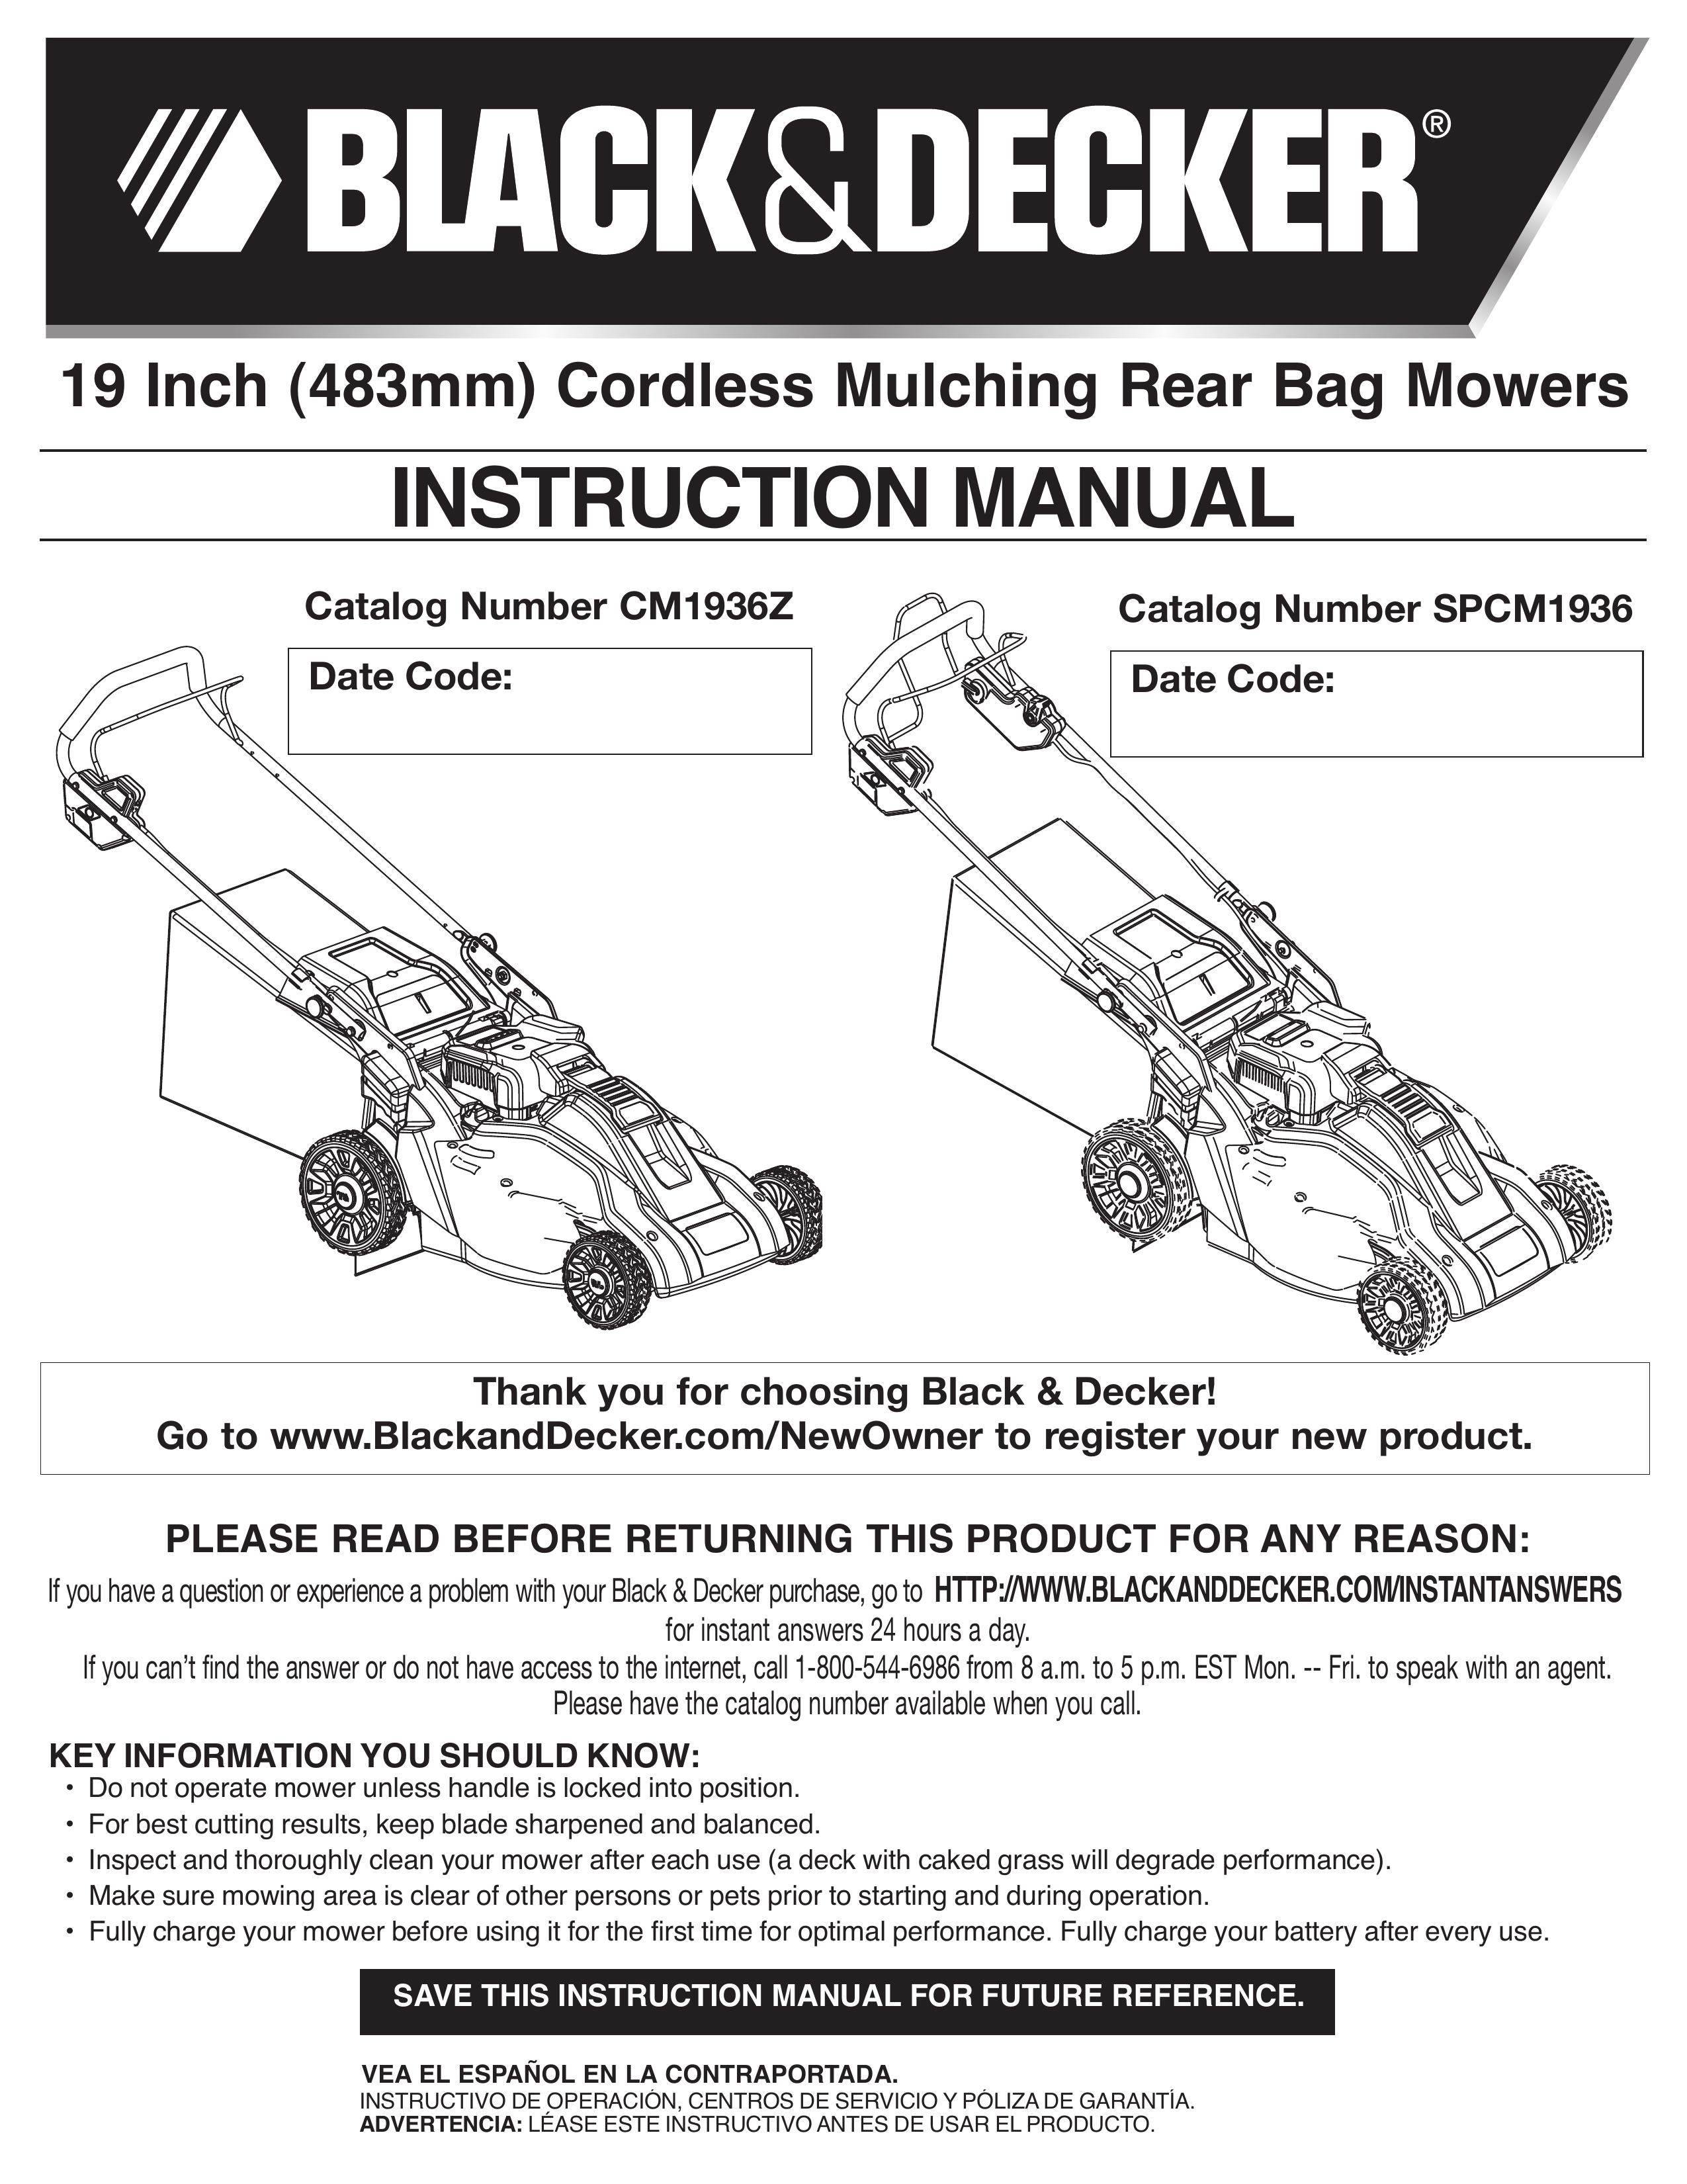 Black & Decker SPCM1936 Lawn Mower User Manual